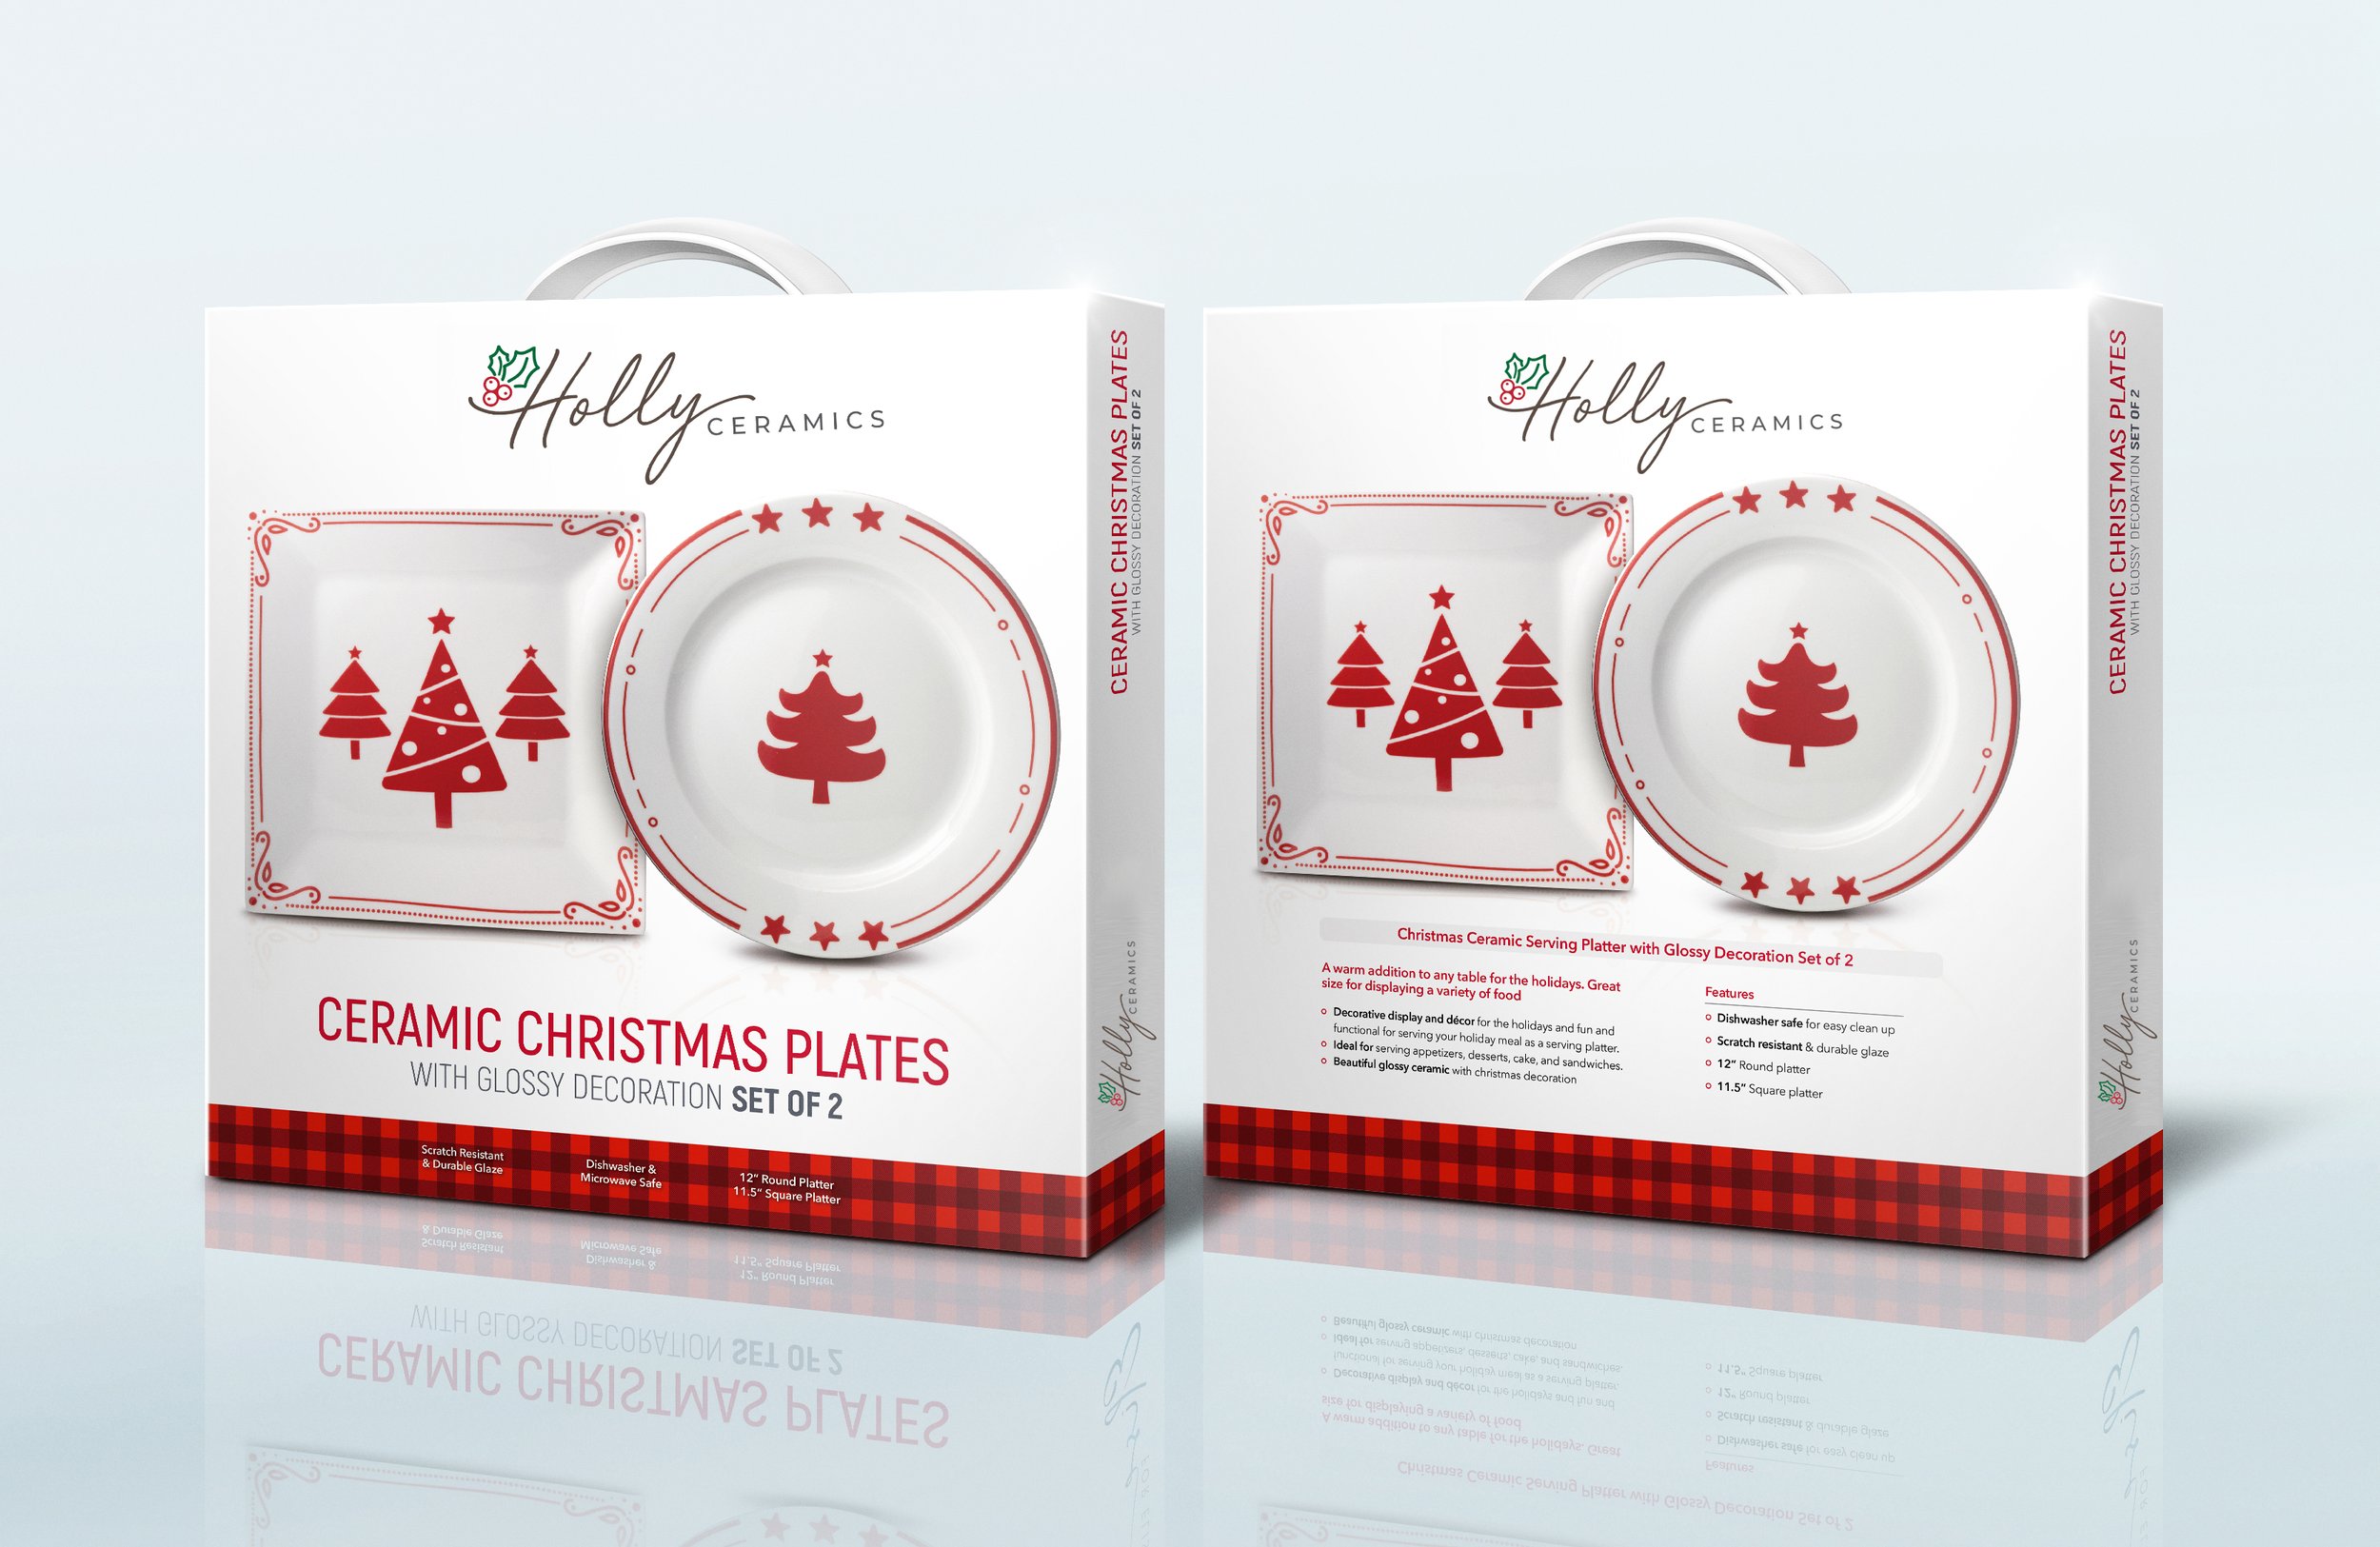 HC_PG94081 Ceramic Christmas Plates 3D Box HD copy.jpg